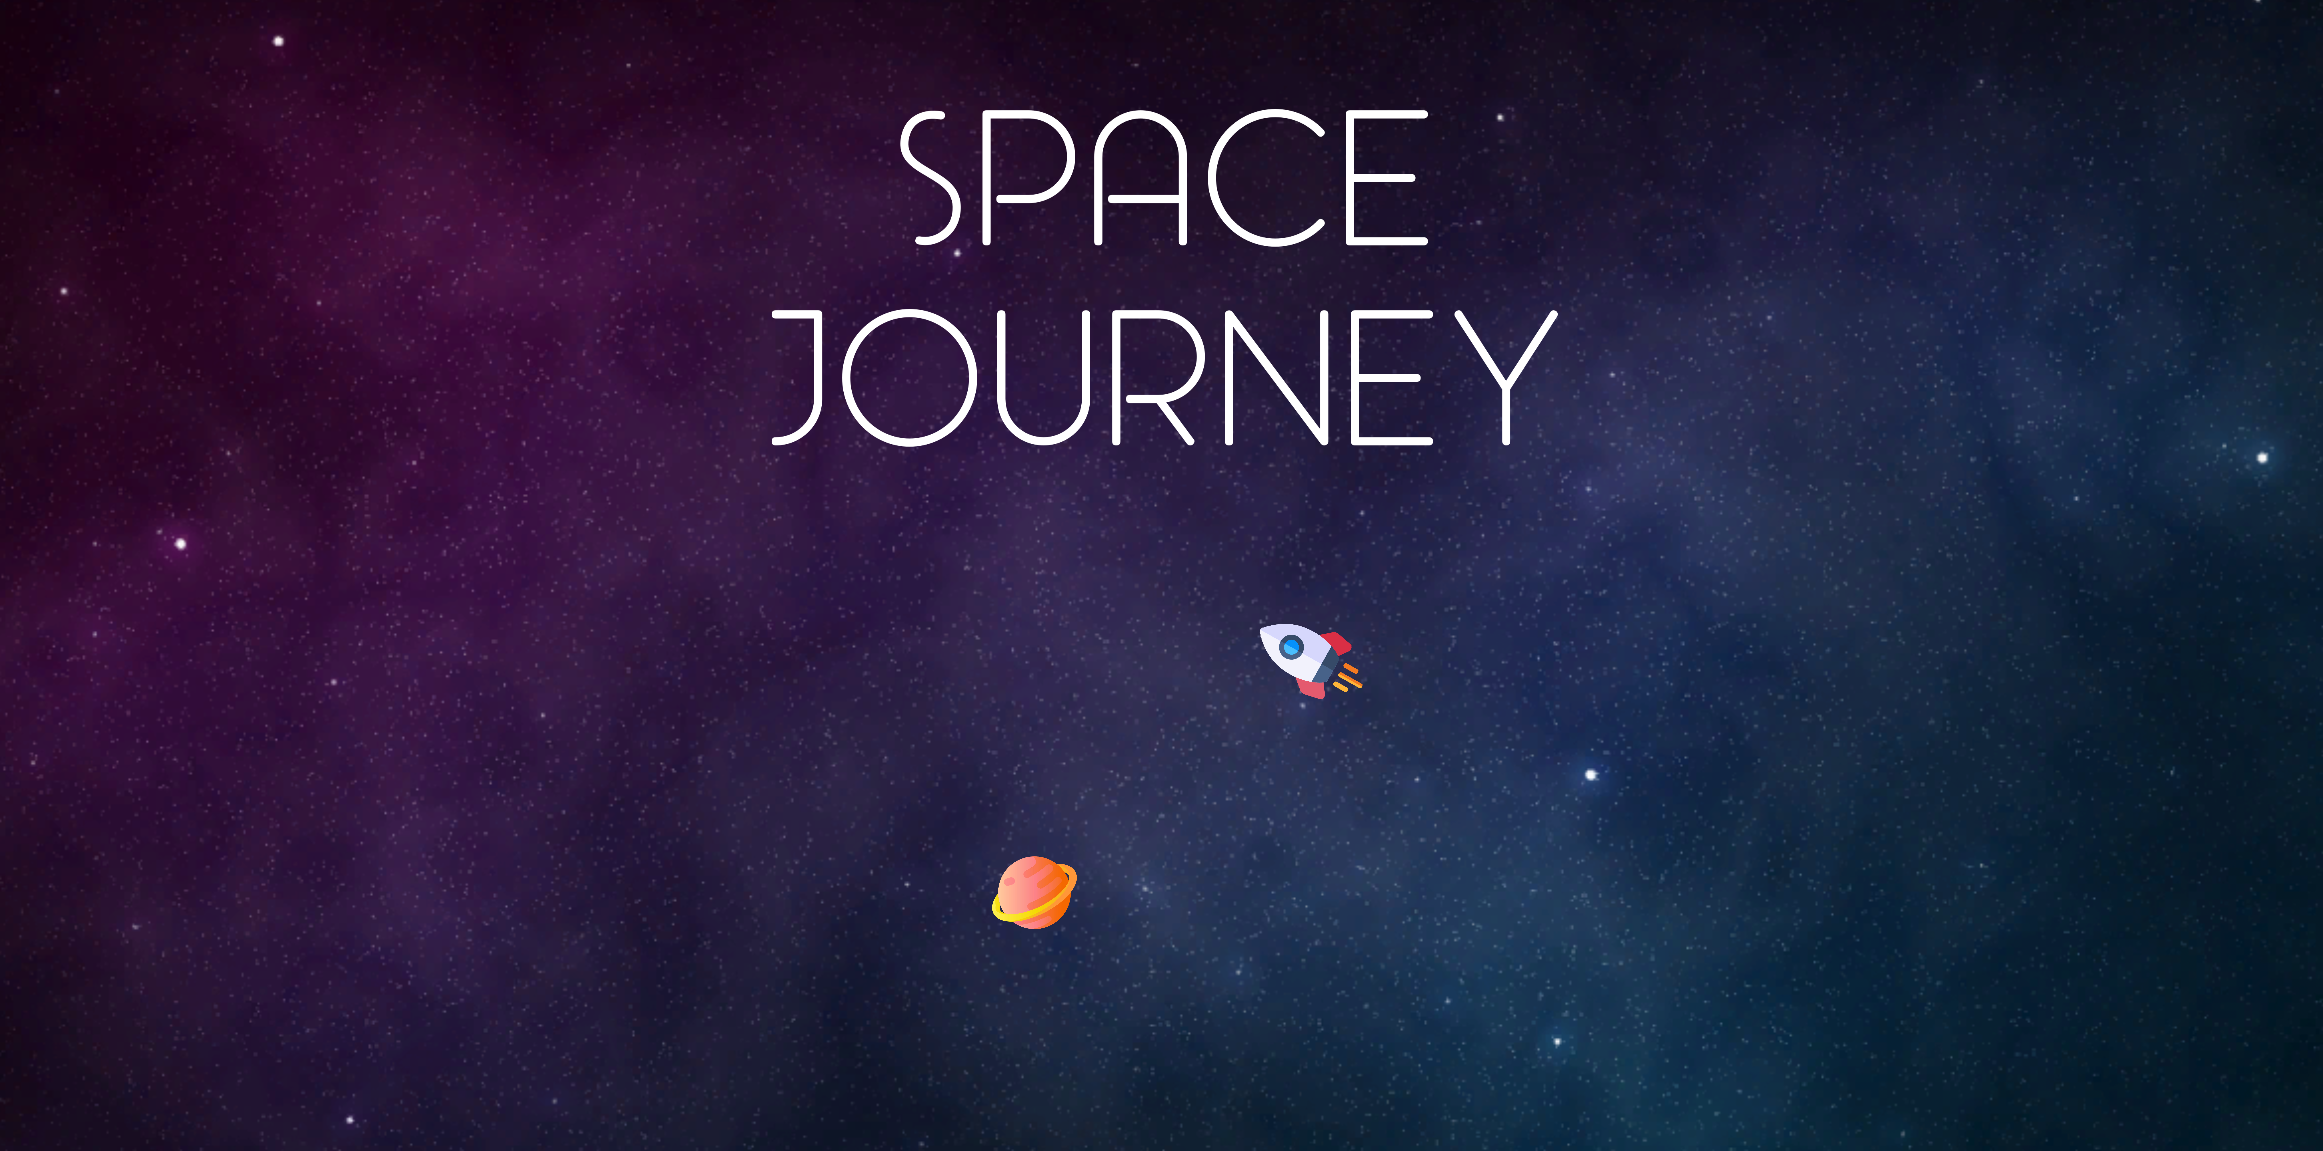 Space Journey by nyoroko